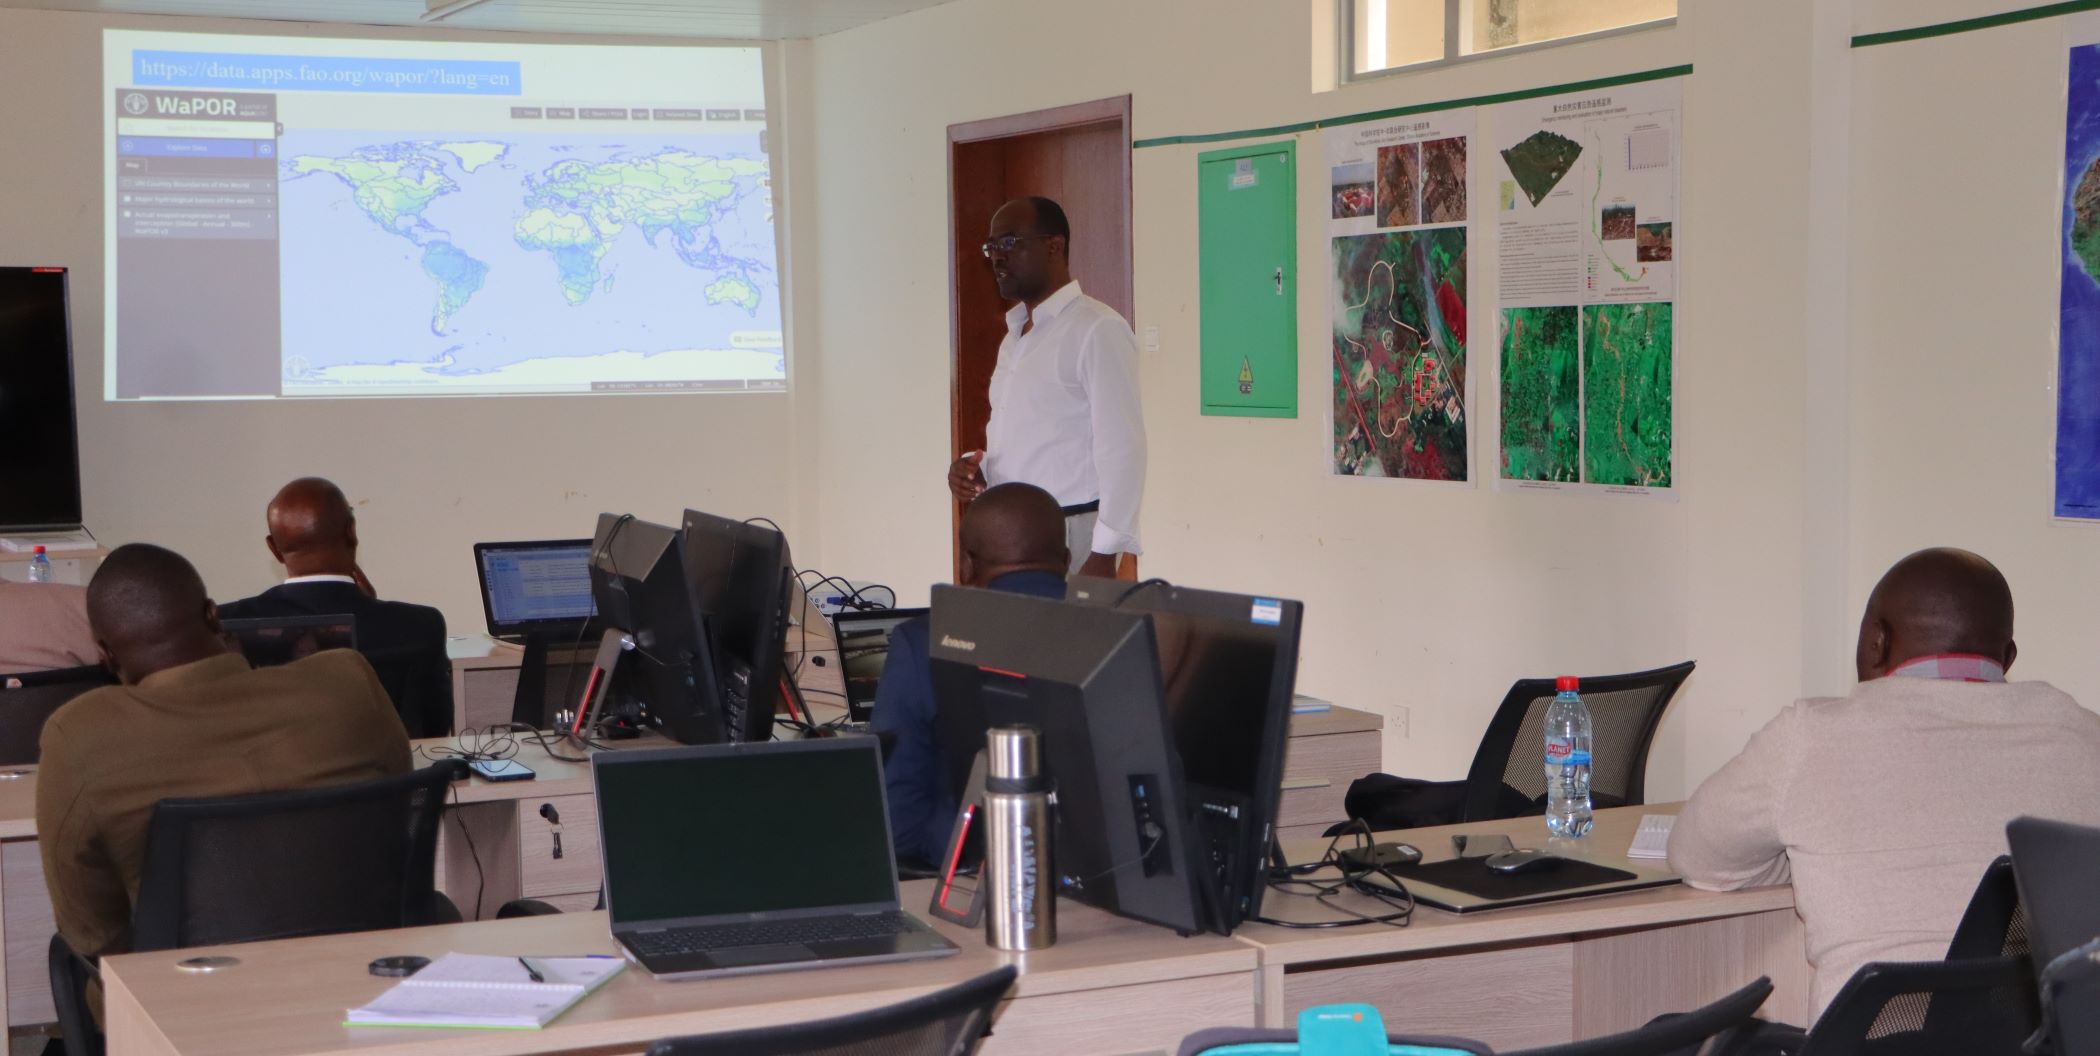 QGIS and WaPOR data training in Kenya